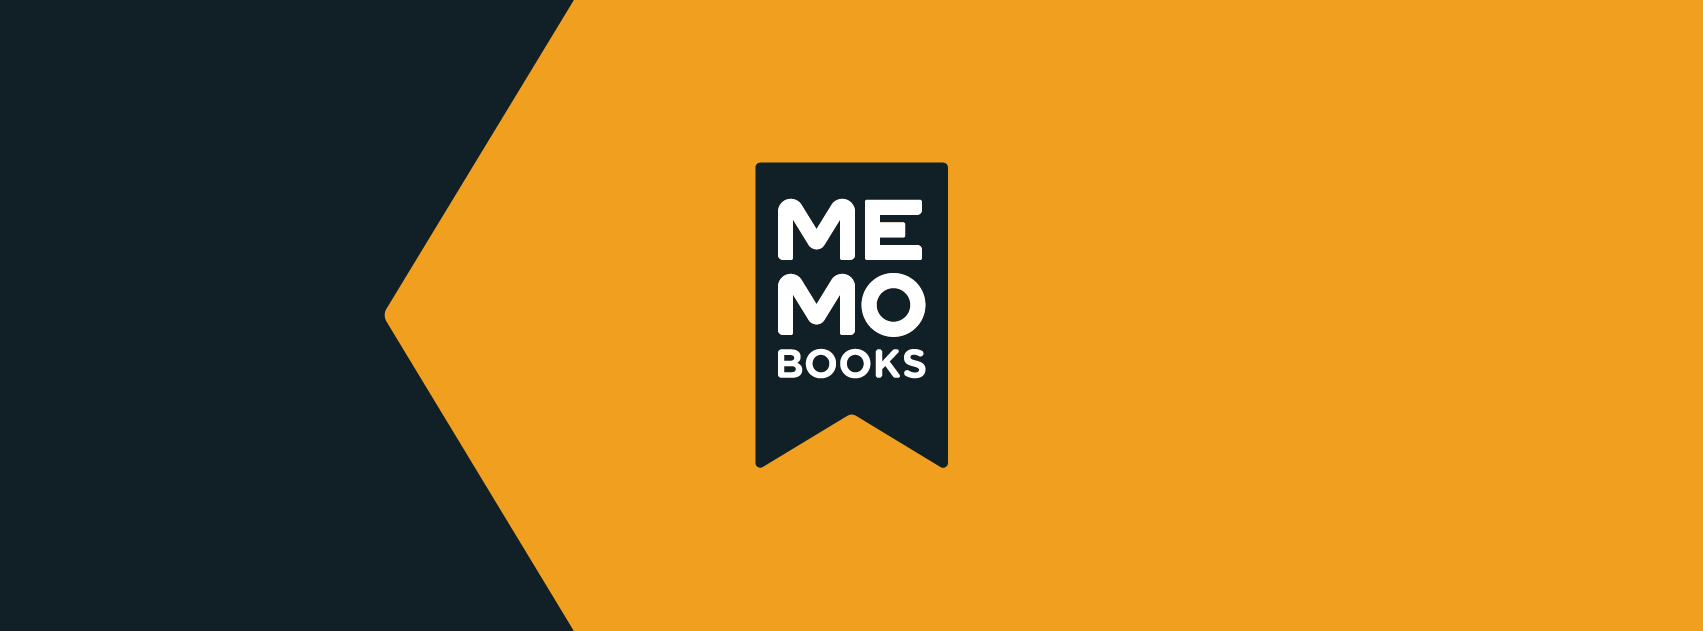 Memobooks Publishing House